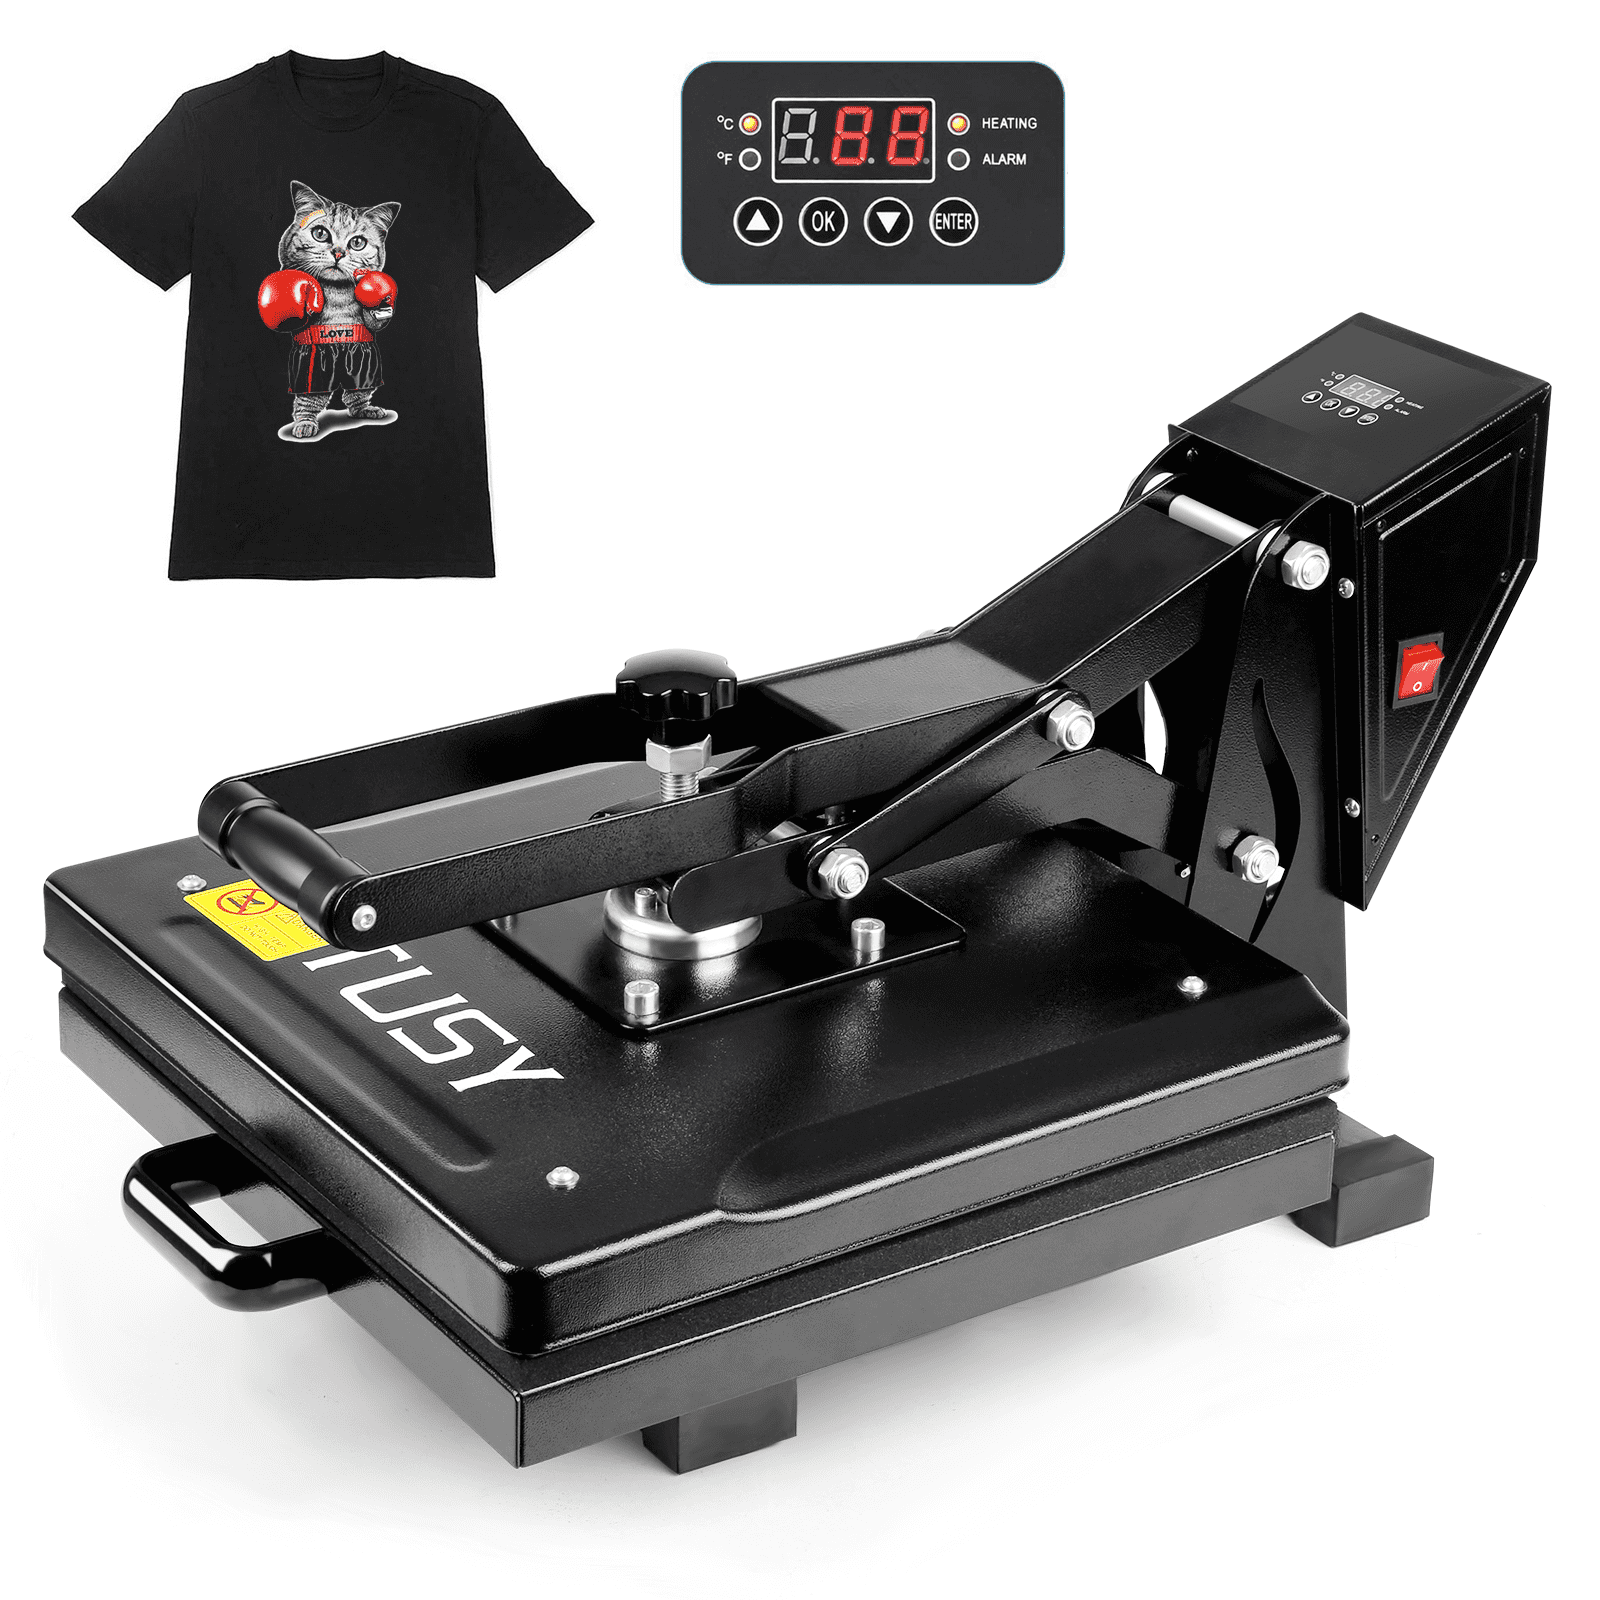 15X15 Inch Clamshell Heat Press Machine T-shirt with Pressure Knob LCD  Displays